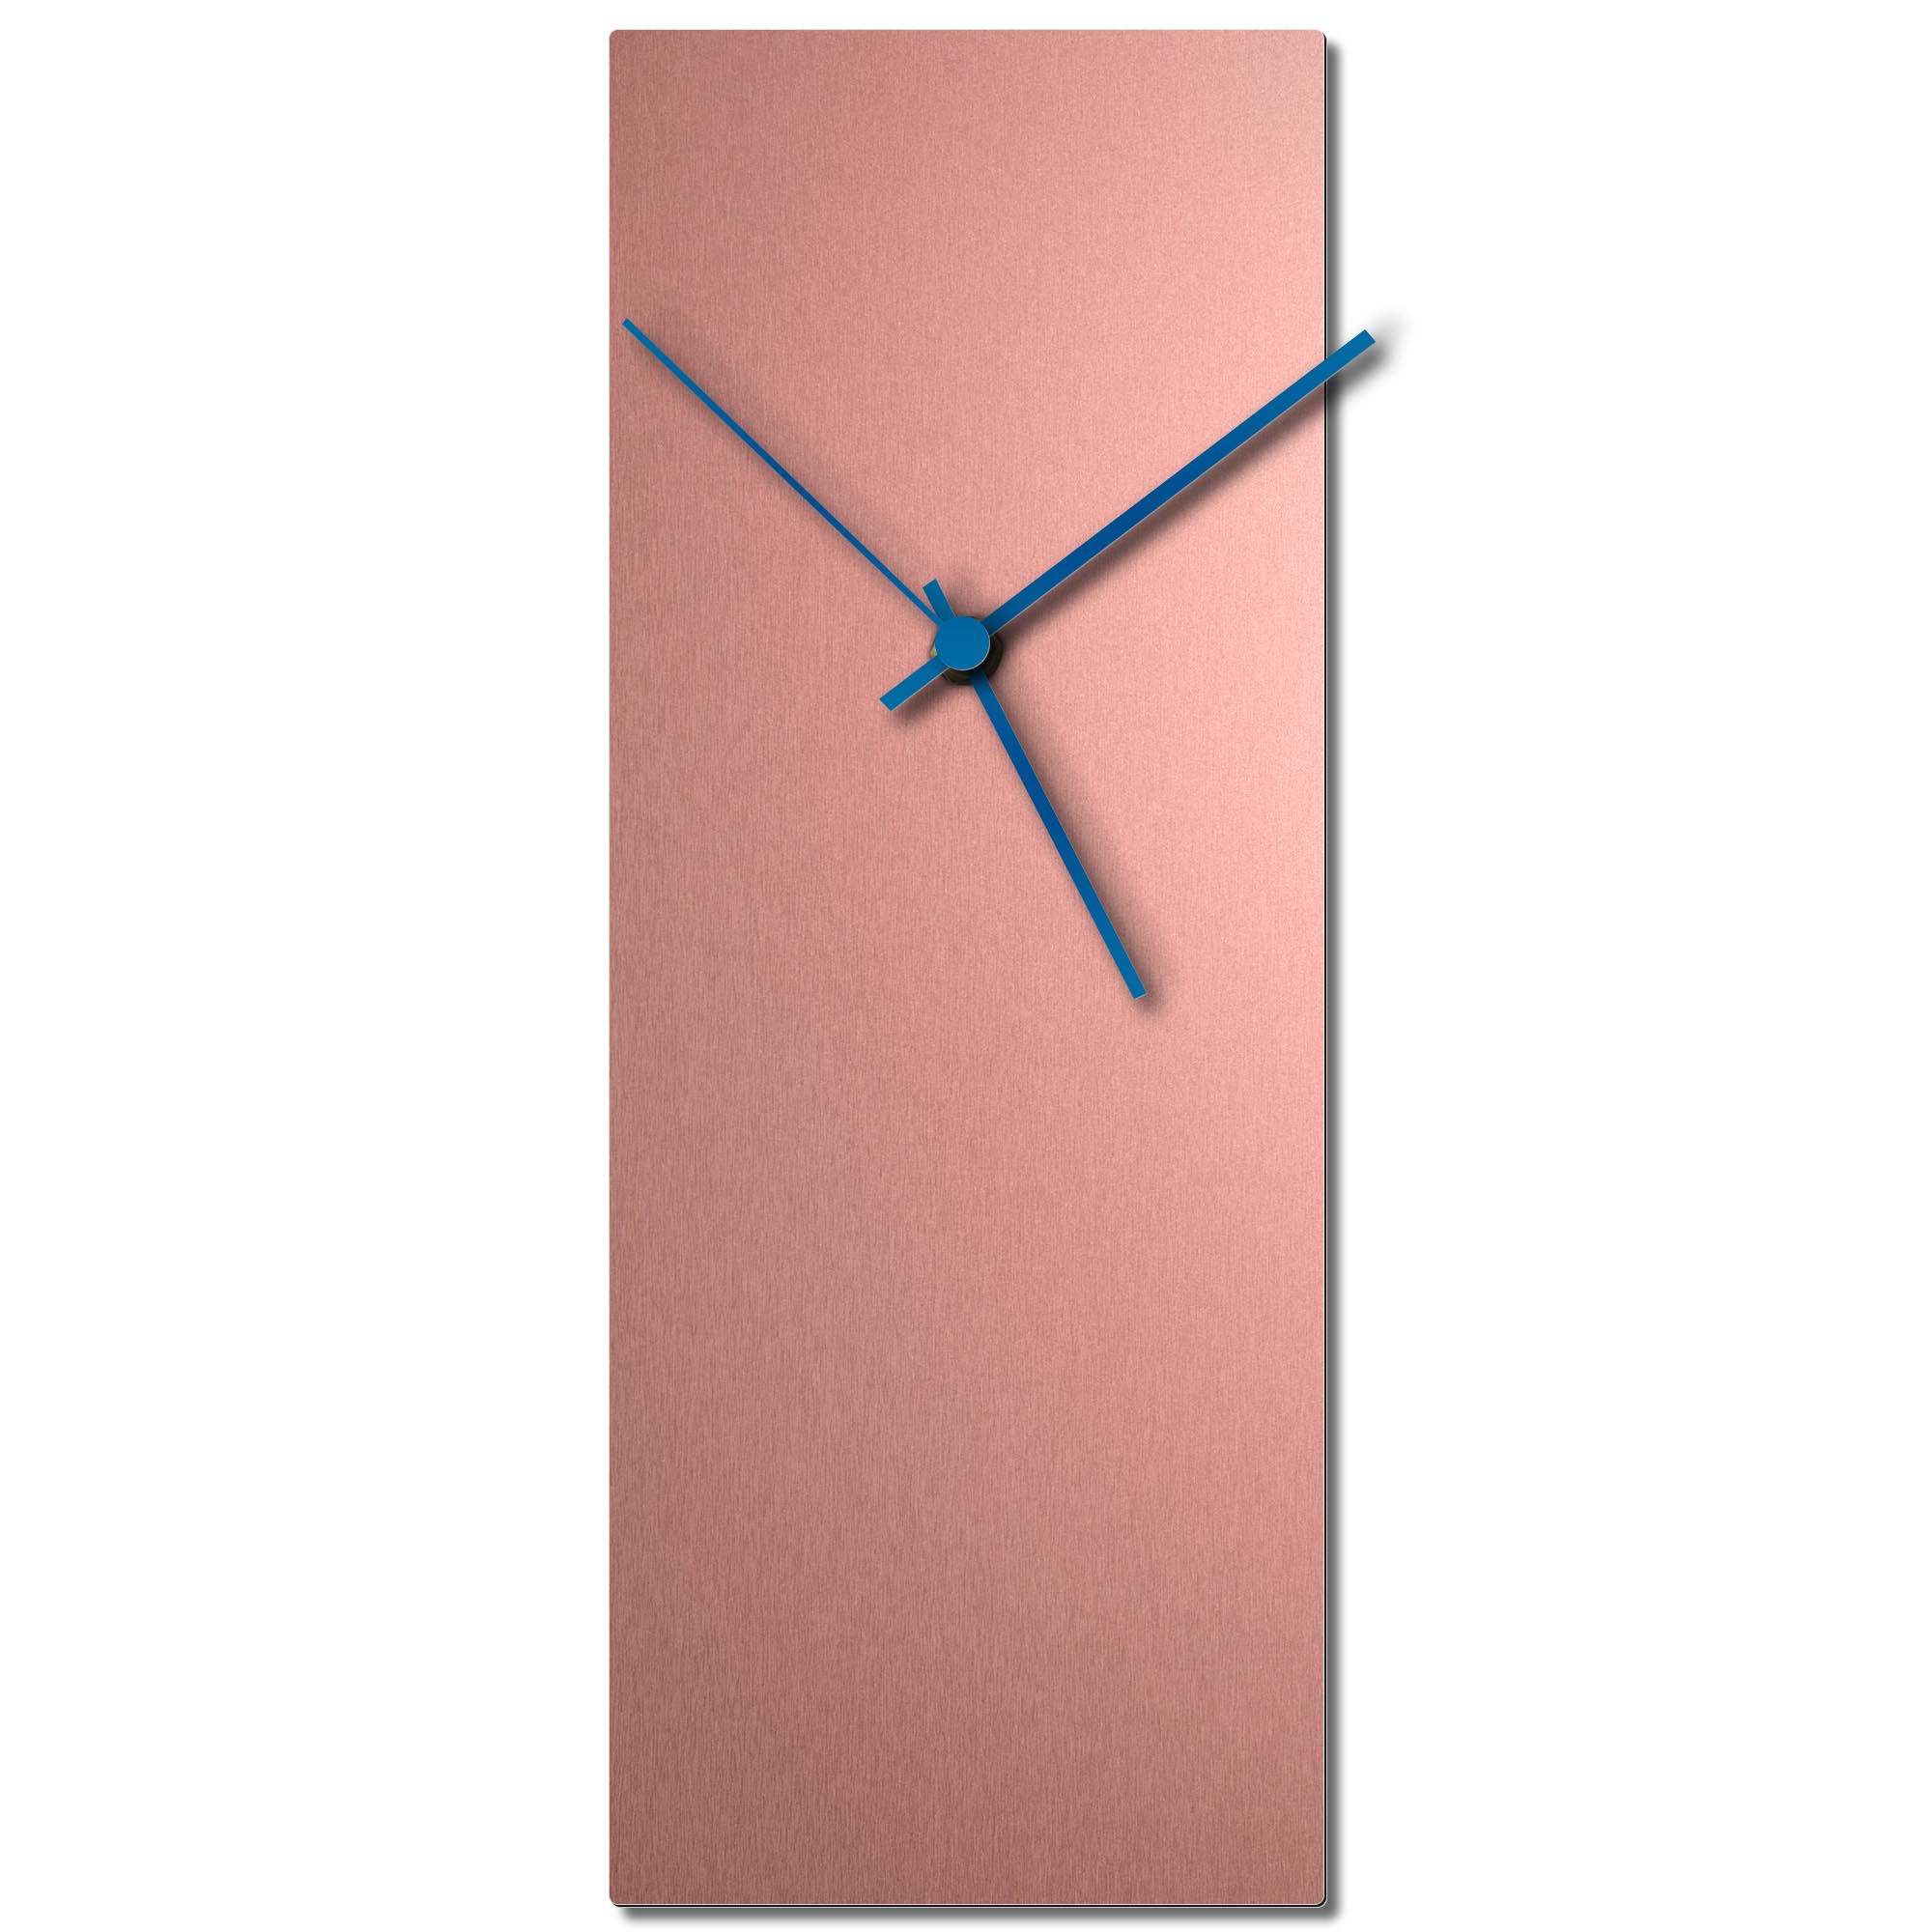 Adam Schwoeppe 'Coppersmith Clock Blue' Midcentury Modern Style Wall Clock